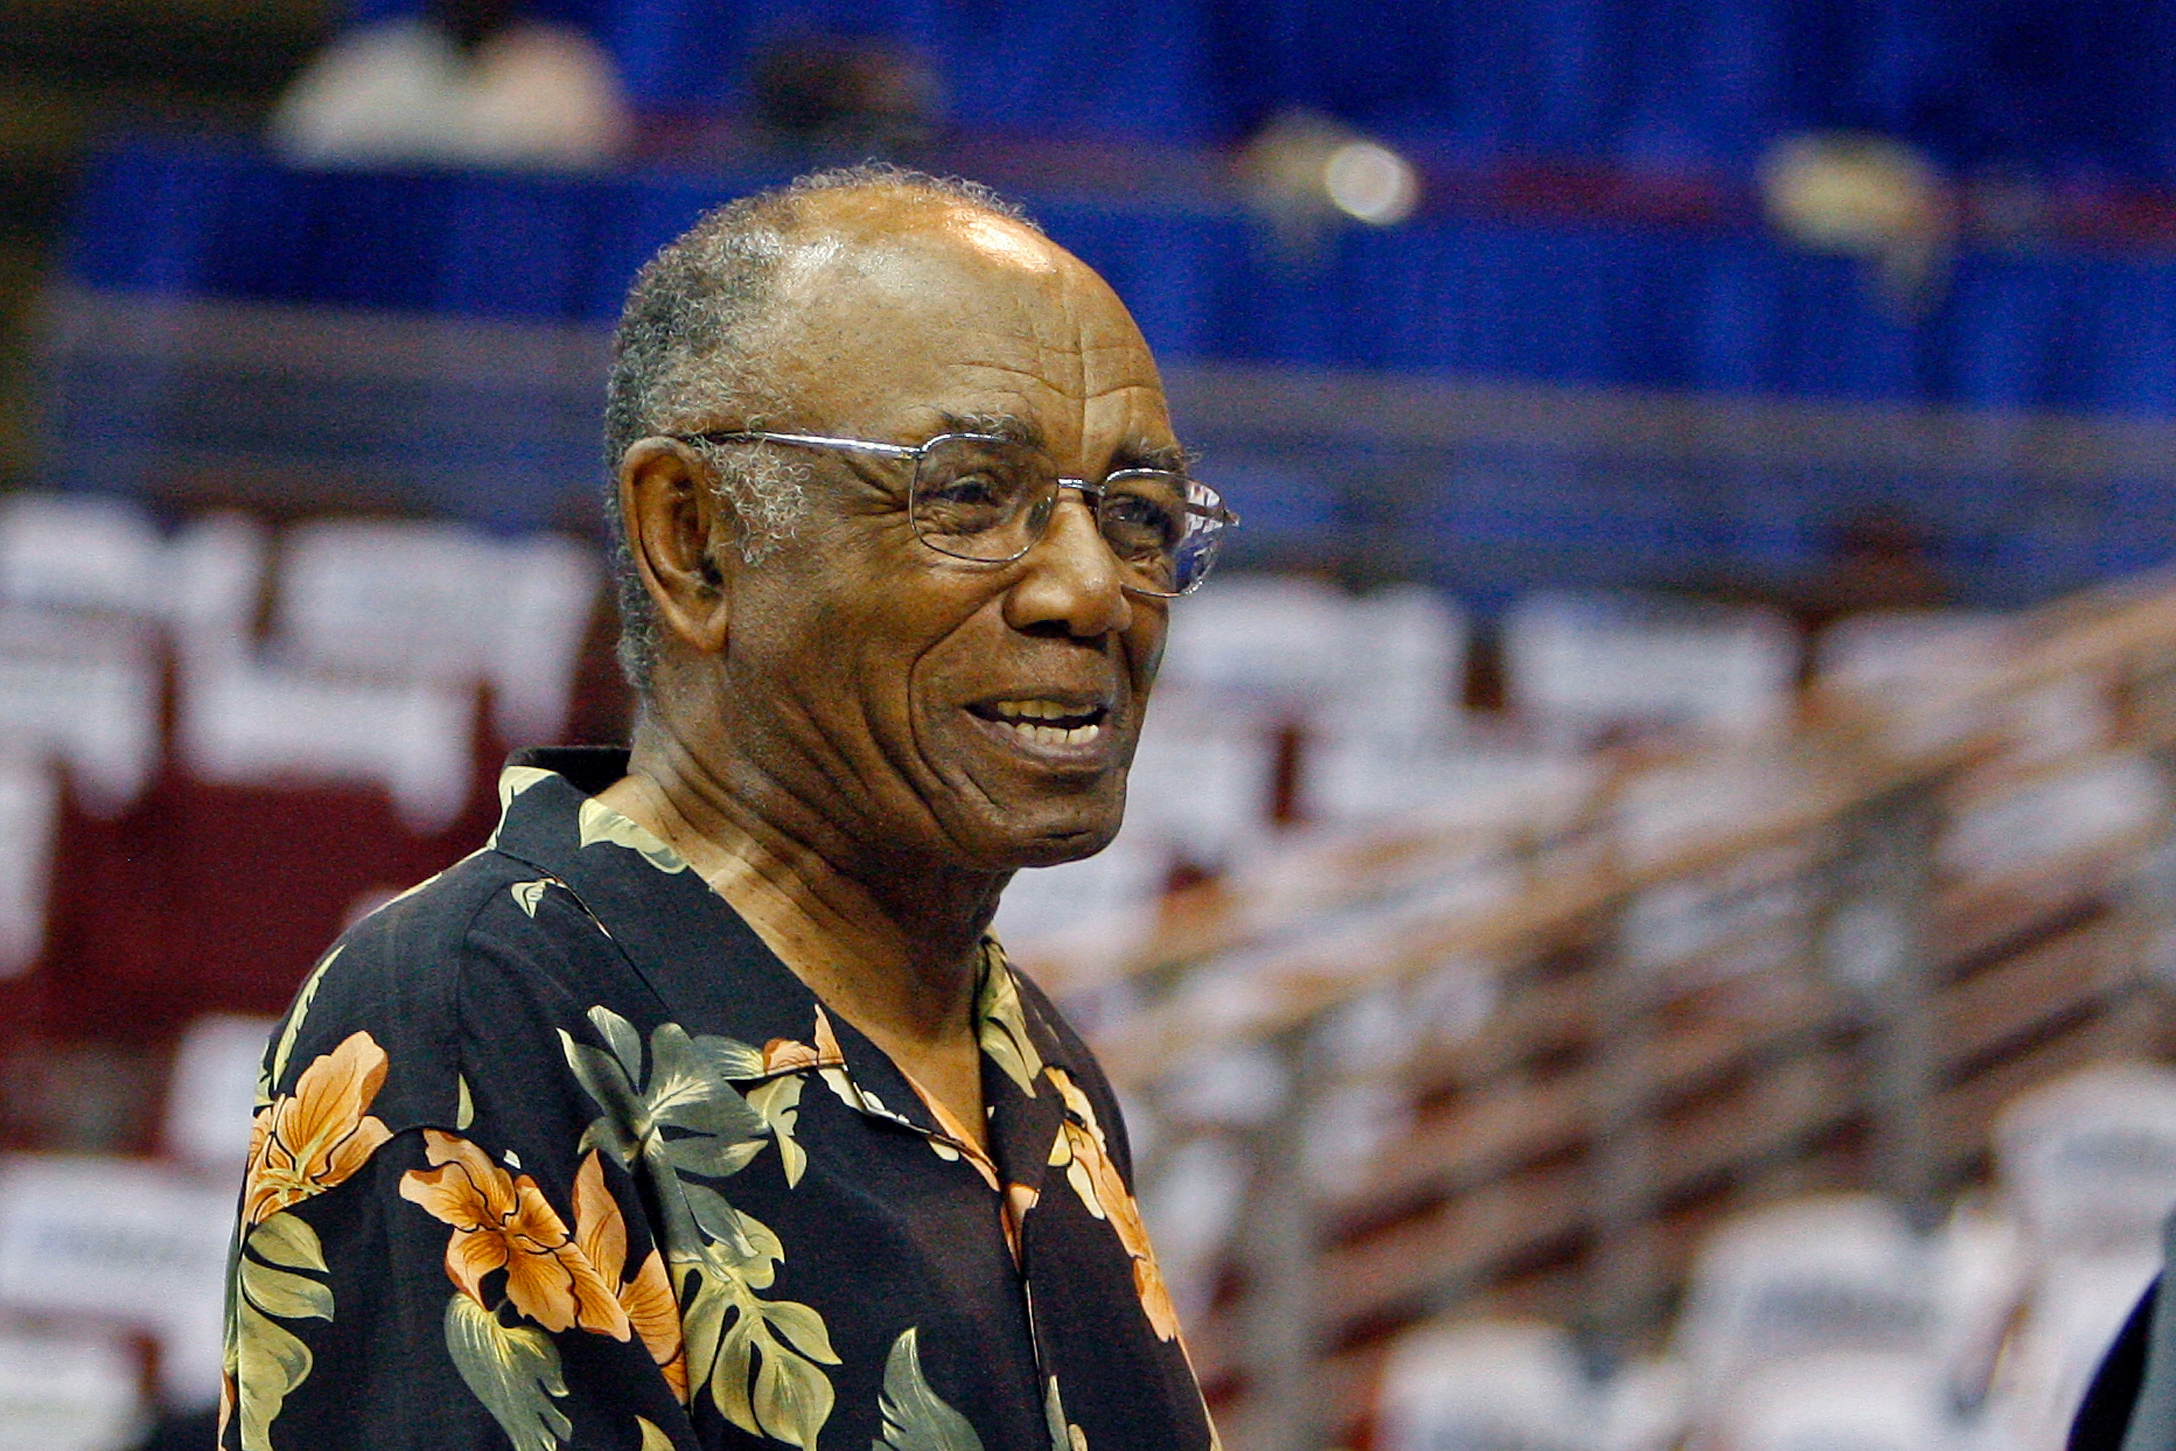 Boston Celtics legend K.C. Jones has died at age 88